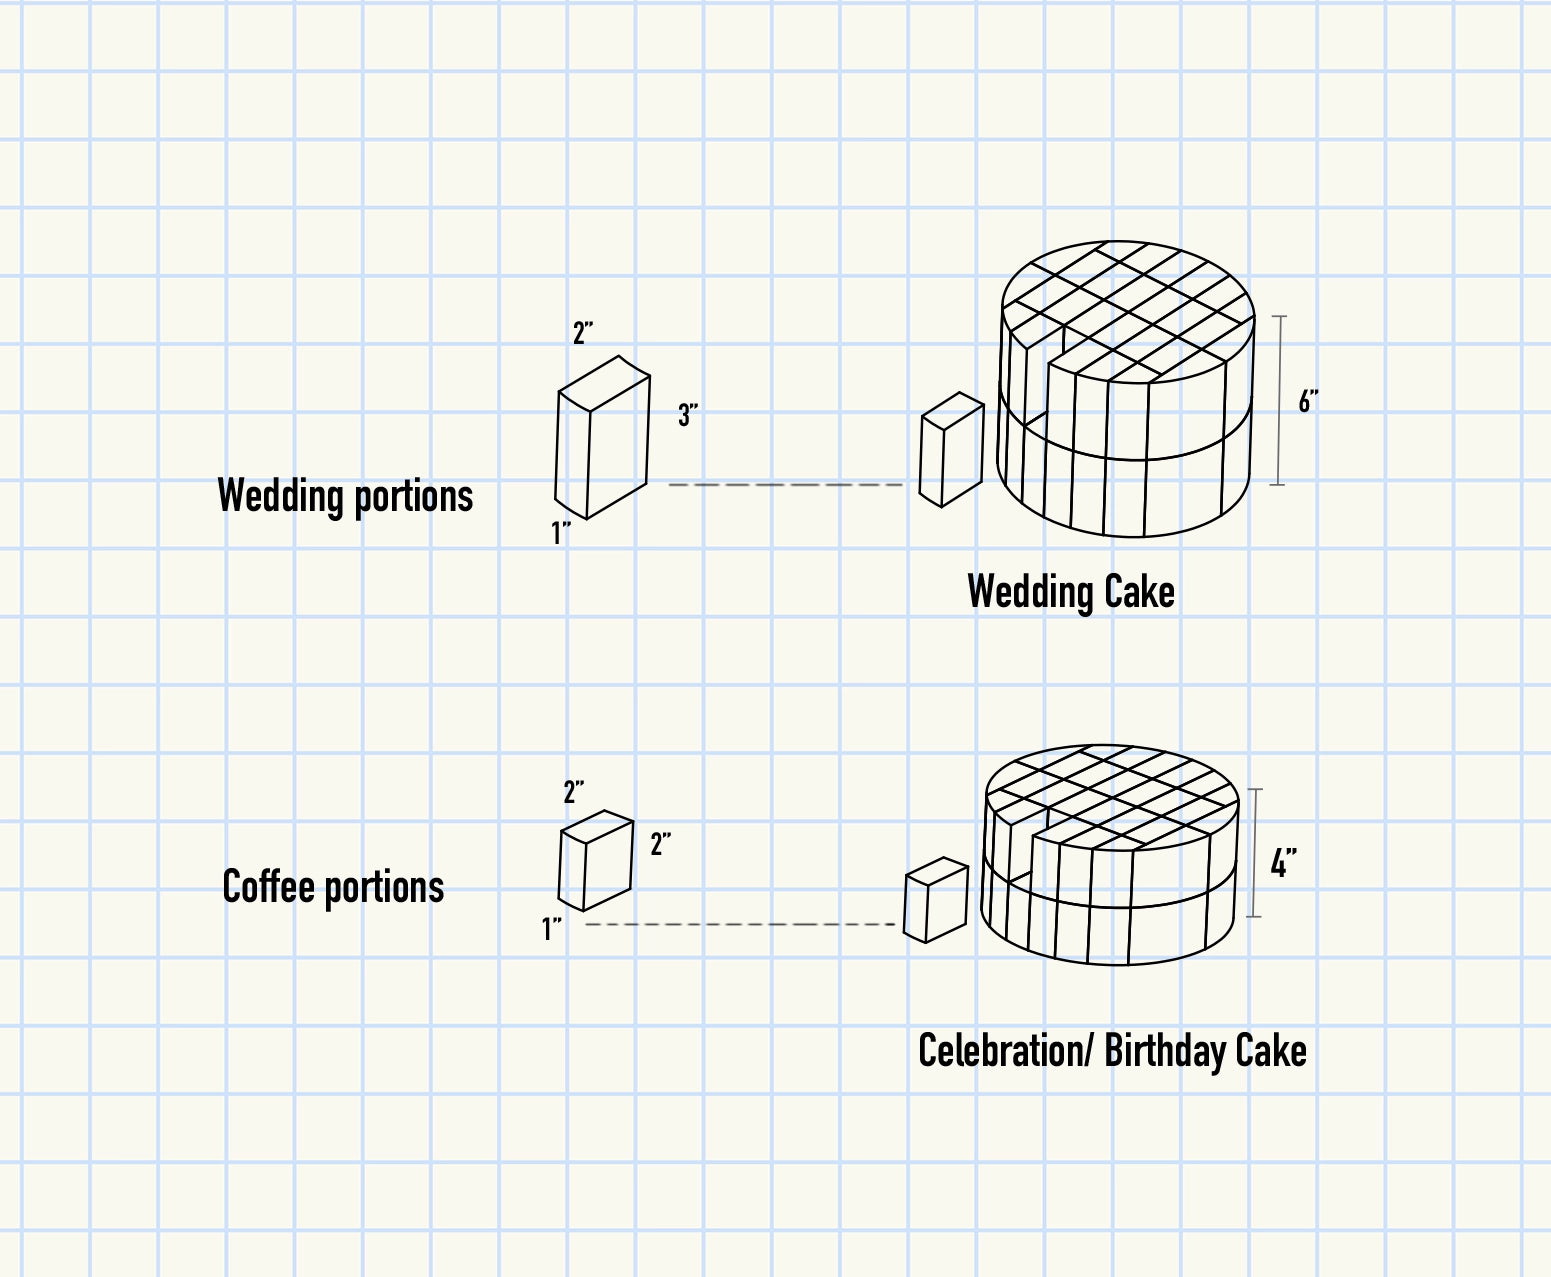 Wedding portions vs Coffee Portions